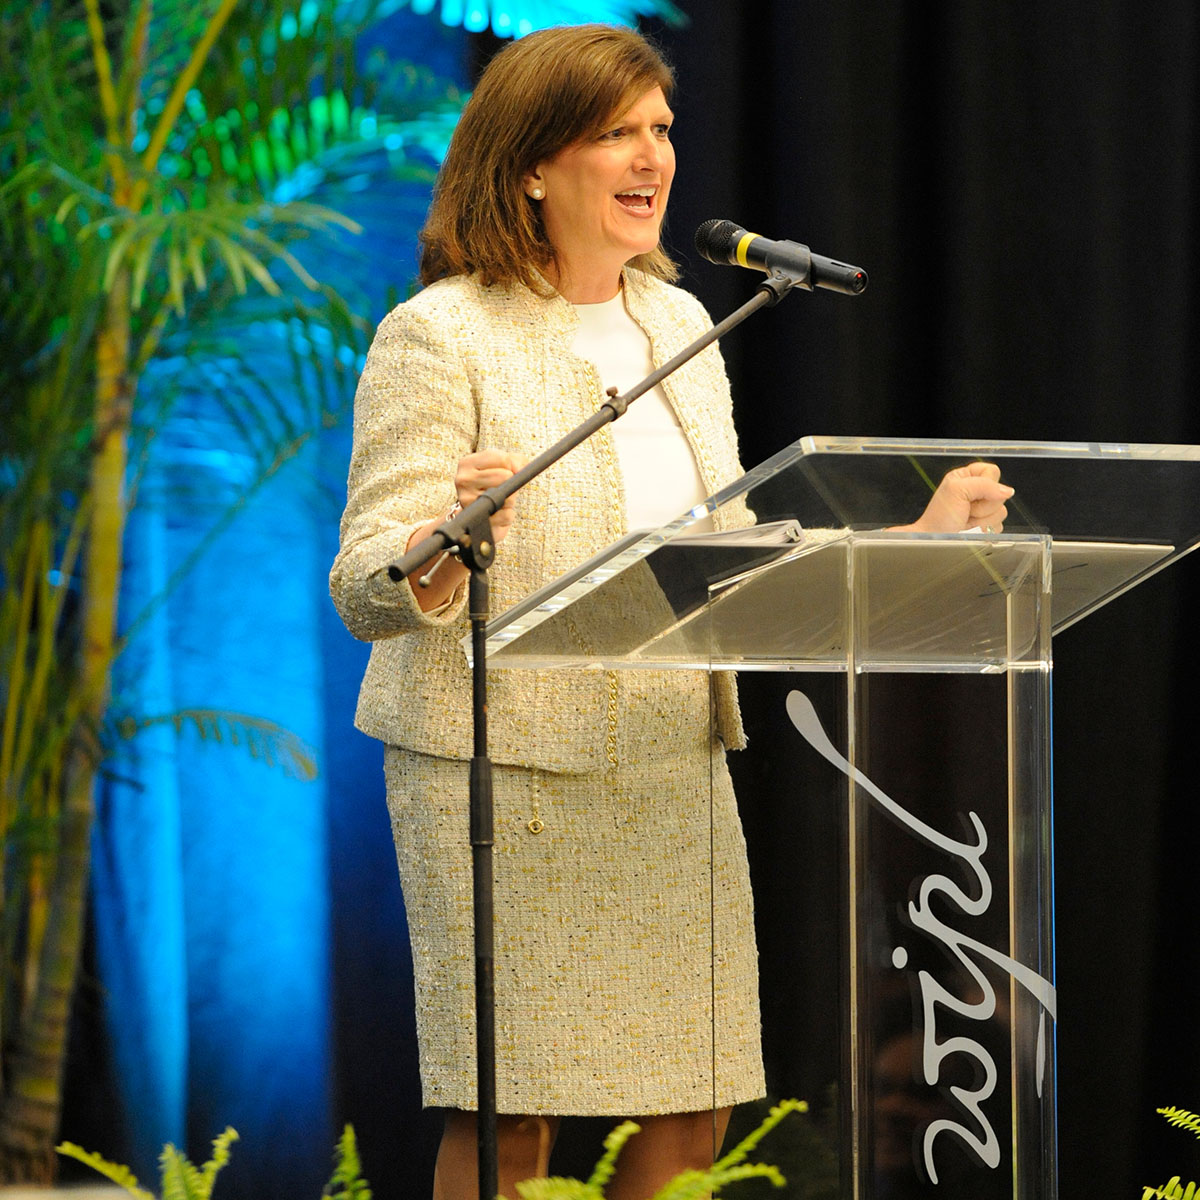 Coastal Carolina University first lady Theresa â€œTerriâ€ DeCenzo has been recognized by Women in Philanthropy and Leadership (WIPL) for Coastal Carolina University for her dedicated service as the f